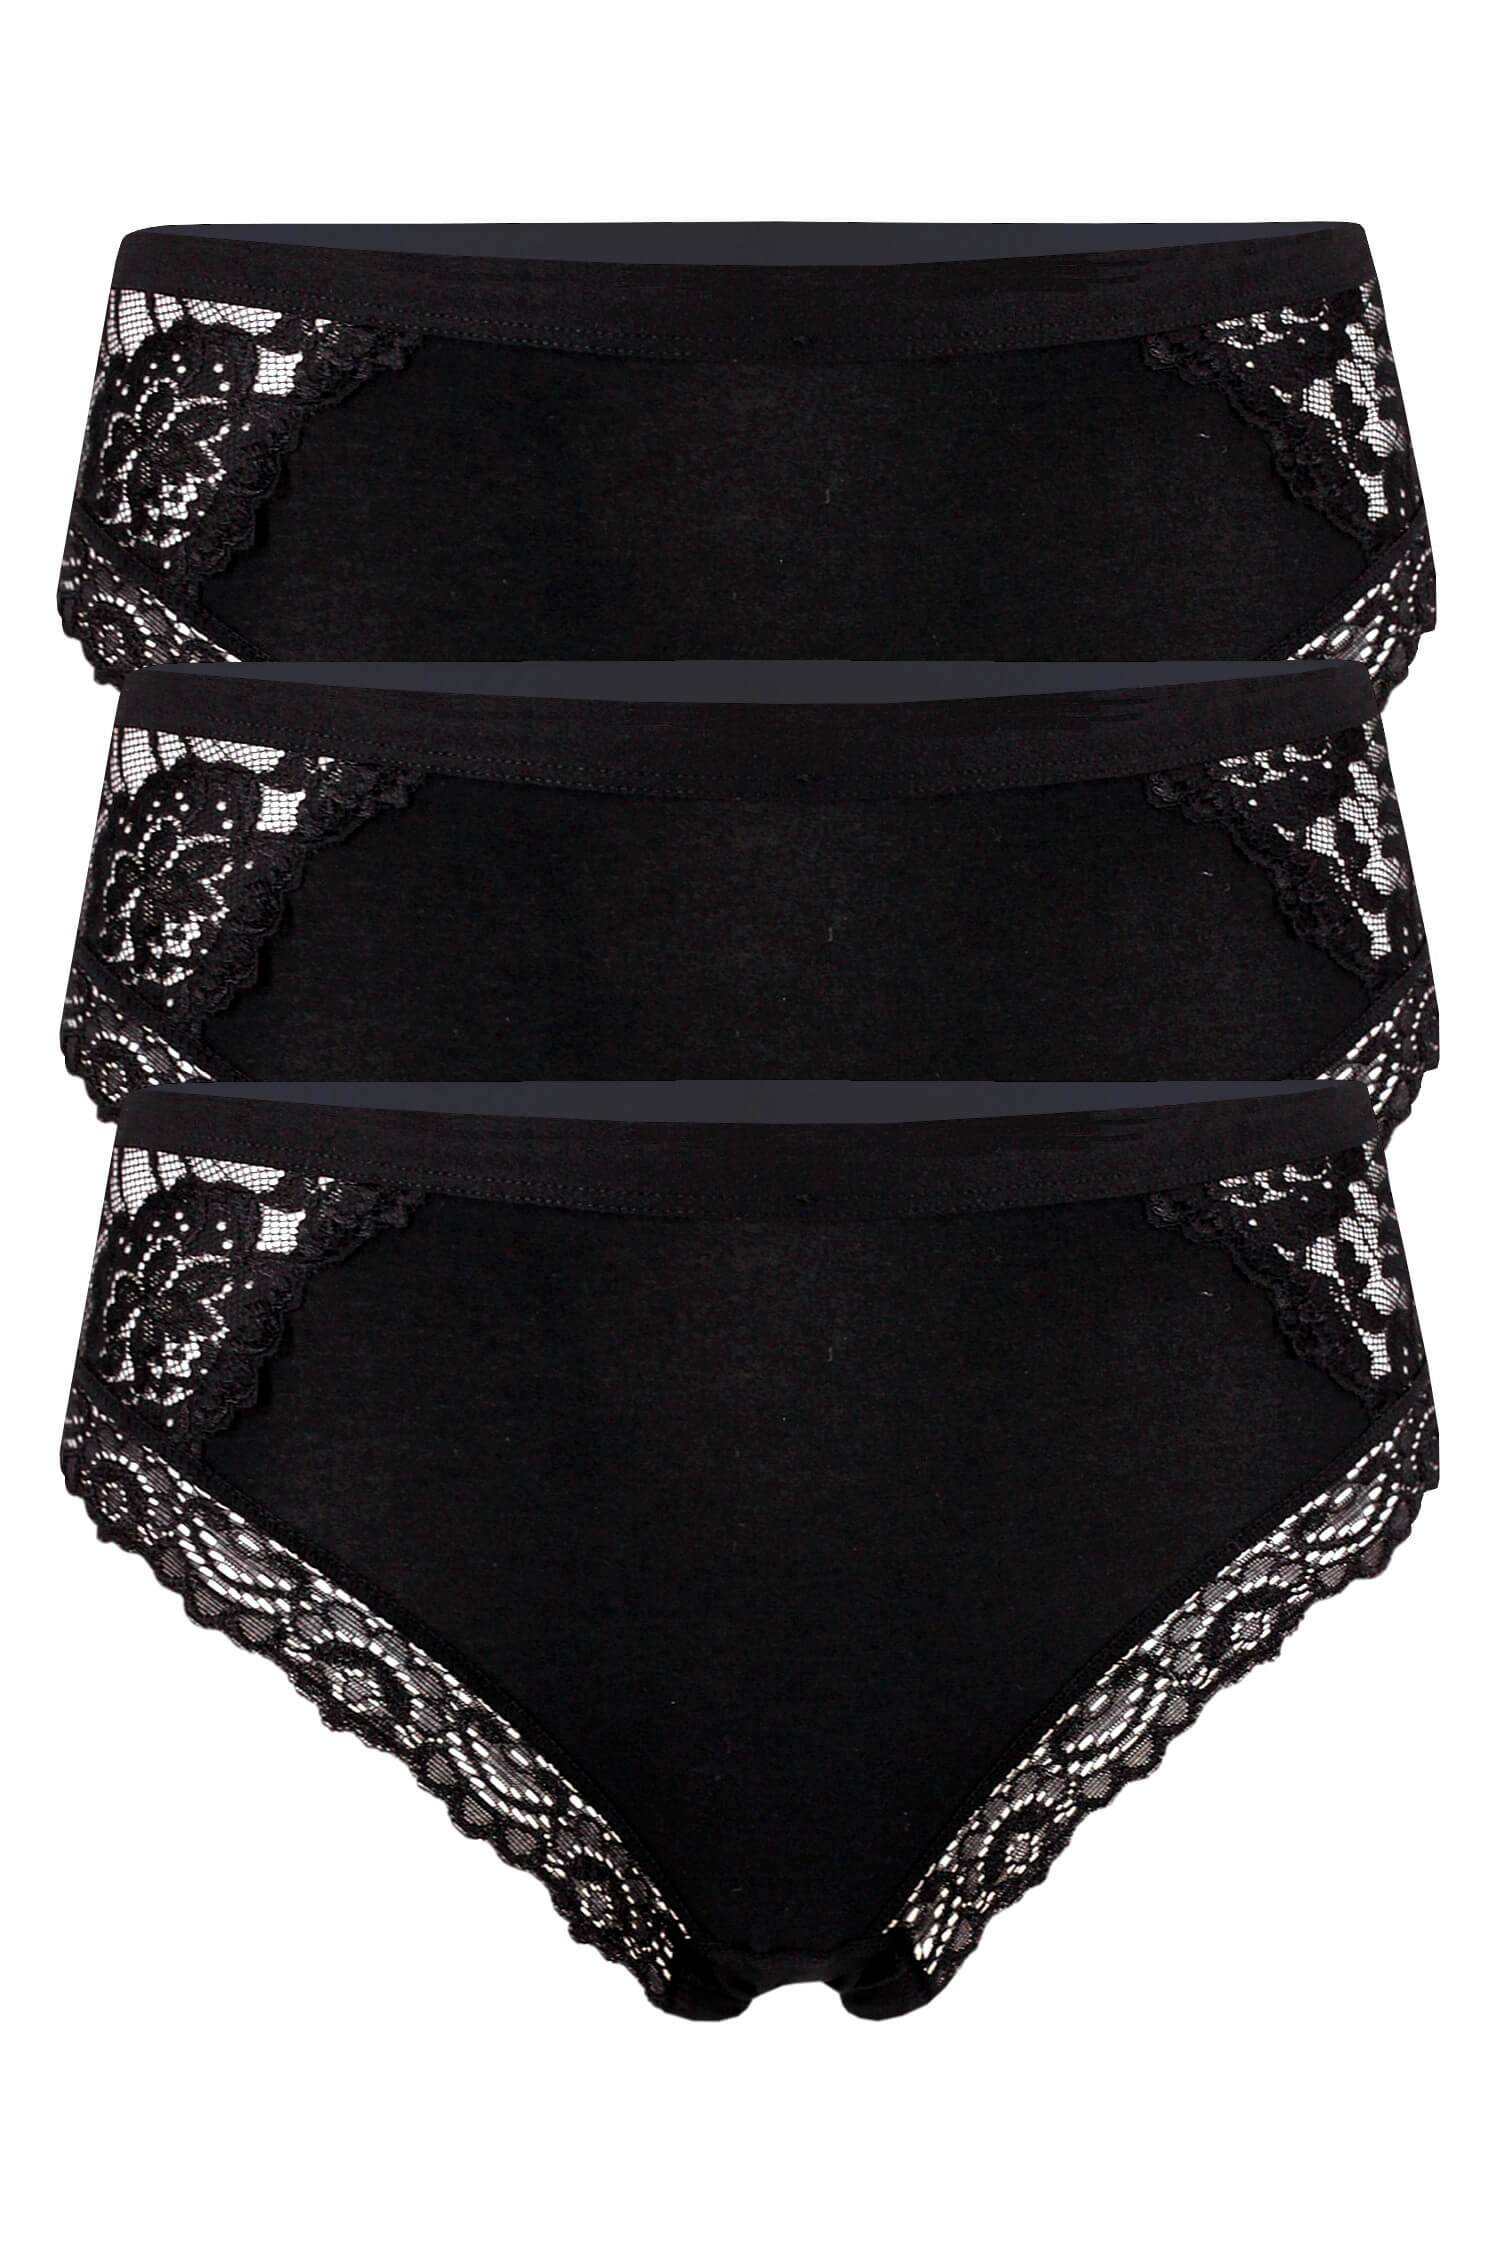 Justyn bavlněné kalhoky s krajkou 1204 - 3 bal. XL černá